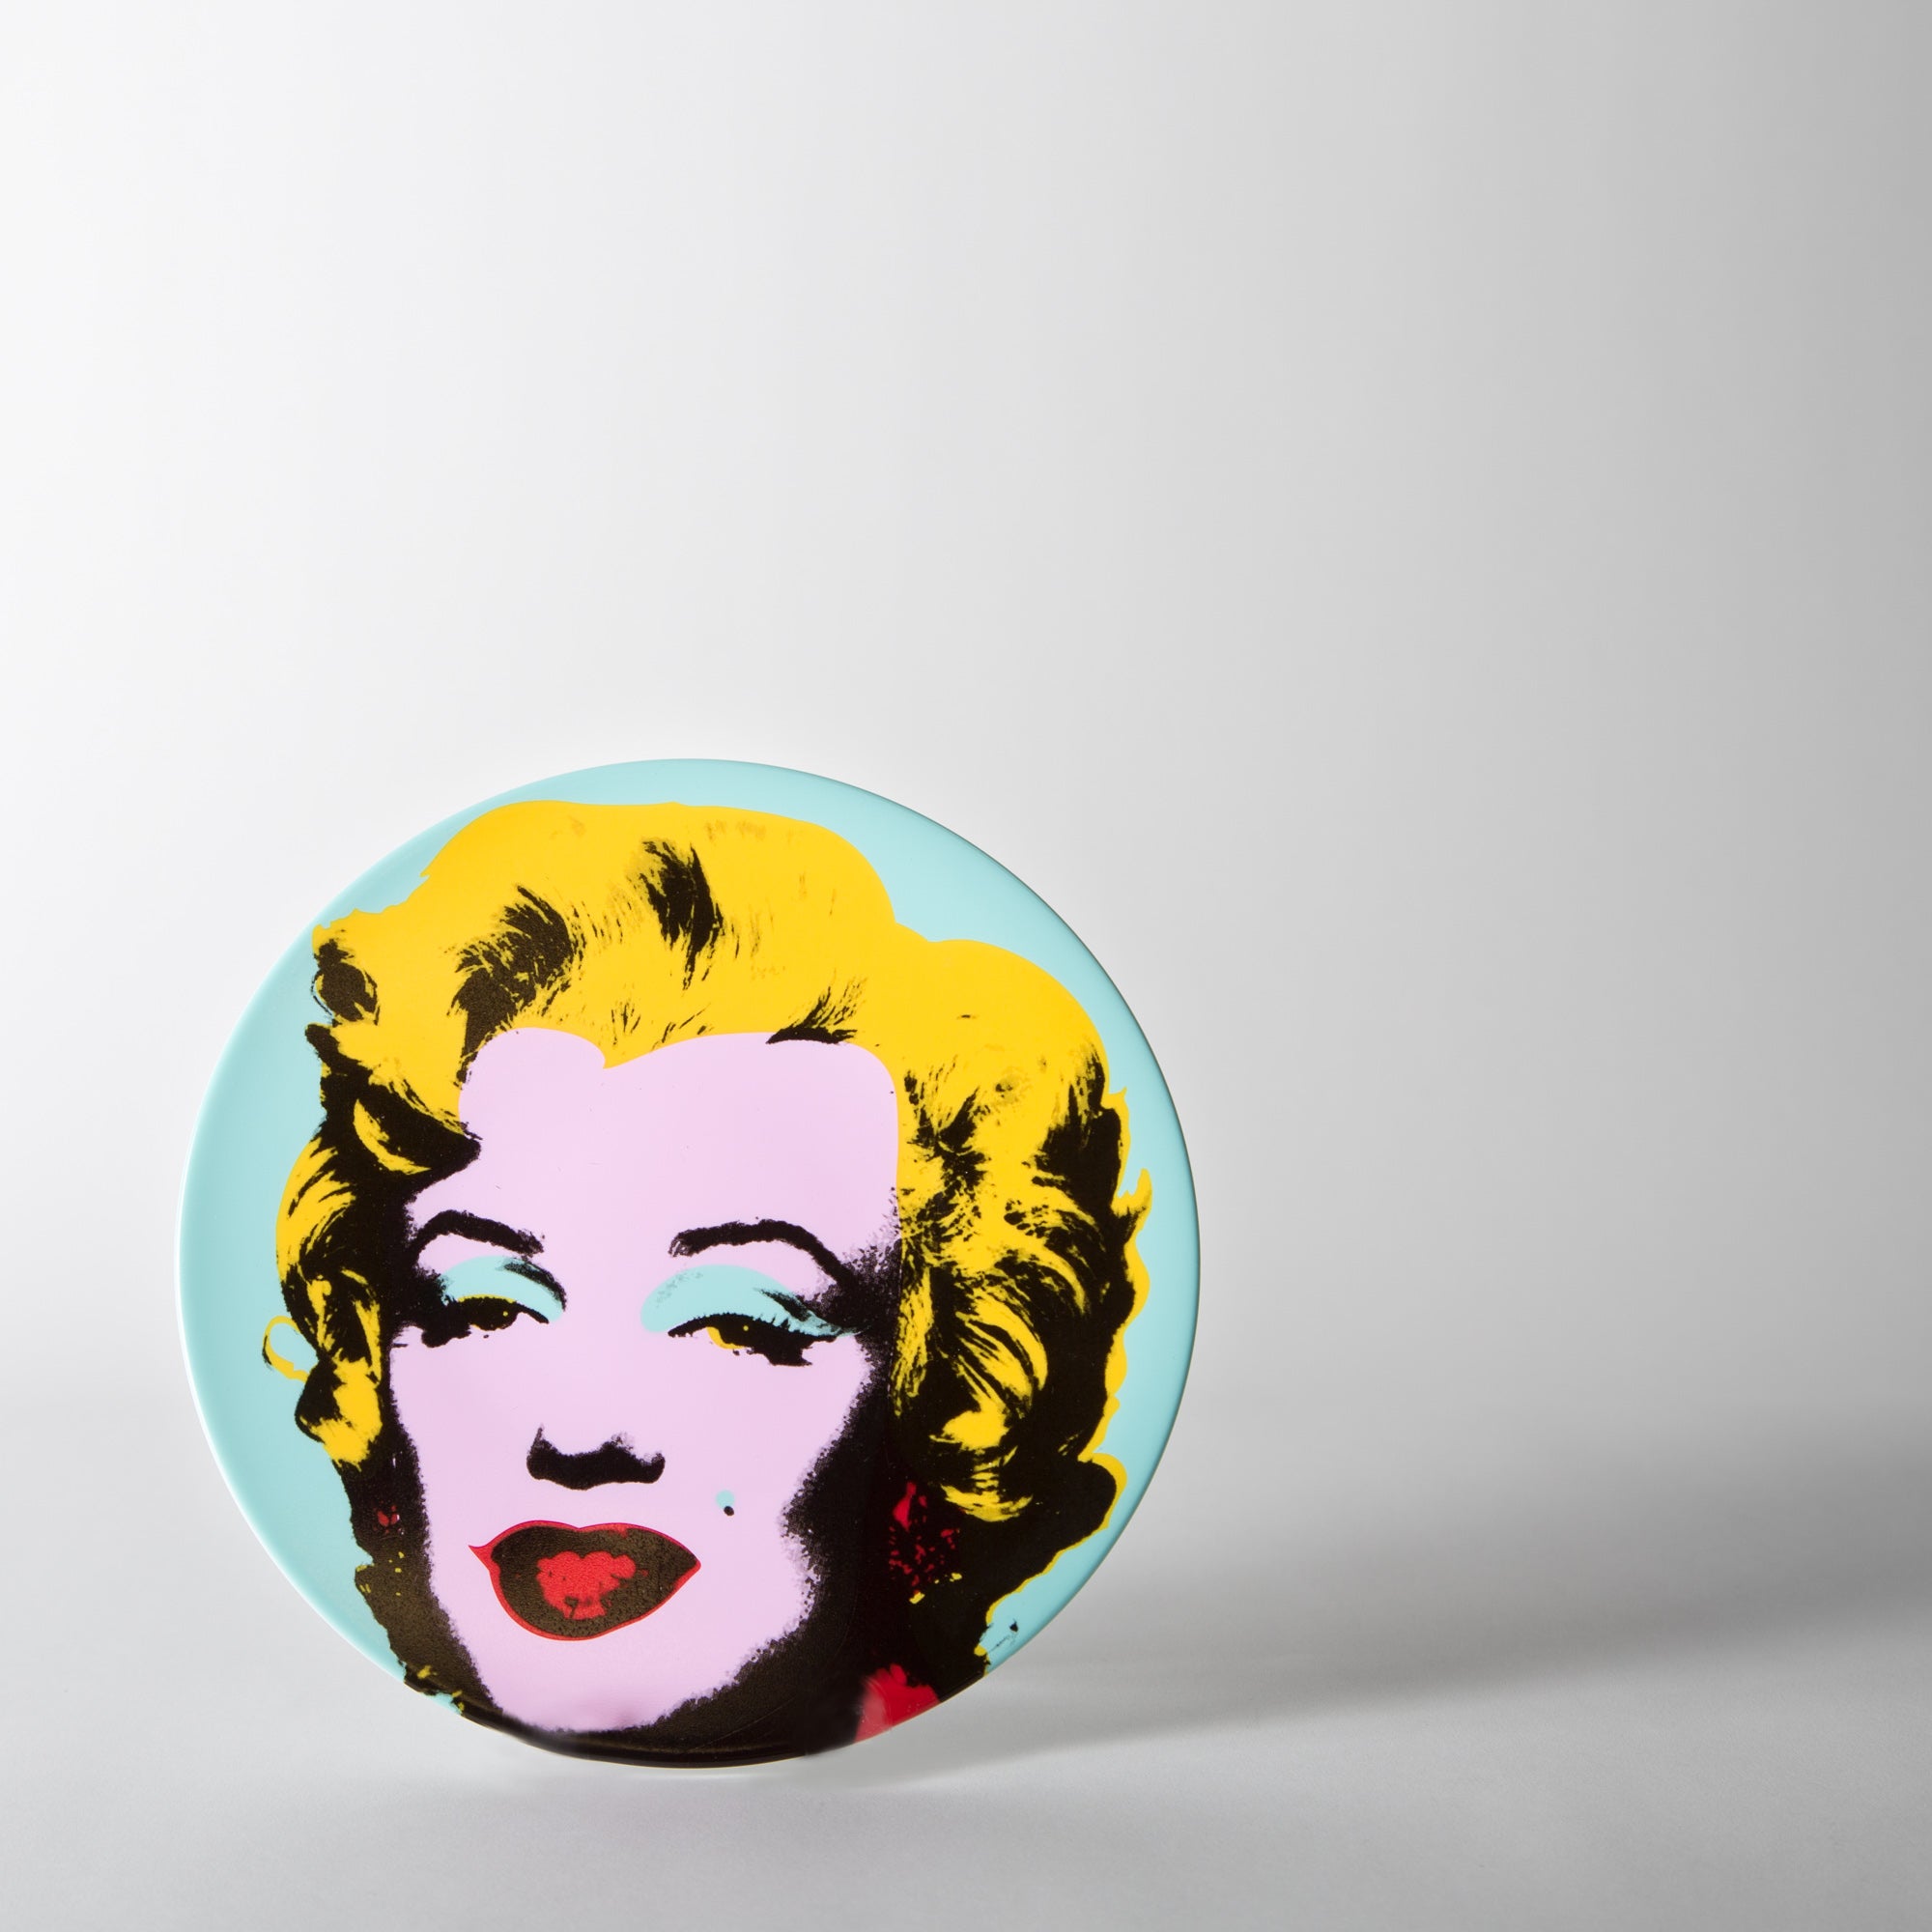 Andy Warhol - 'Blue Marilyn' Plate - Secret Location